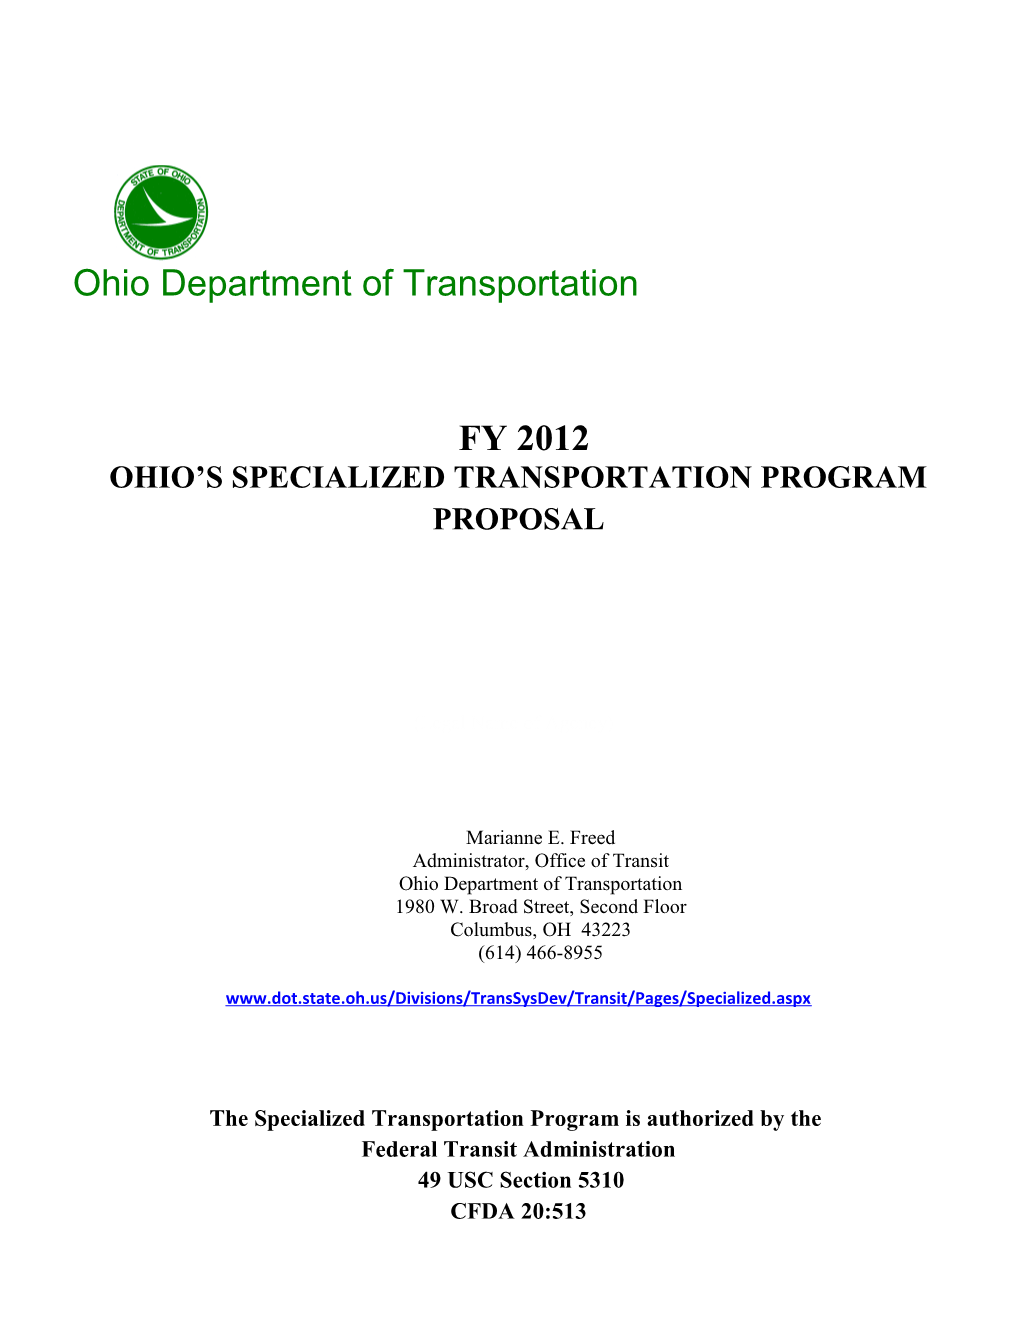 Ohio S Specialized Transportation Program s1